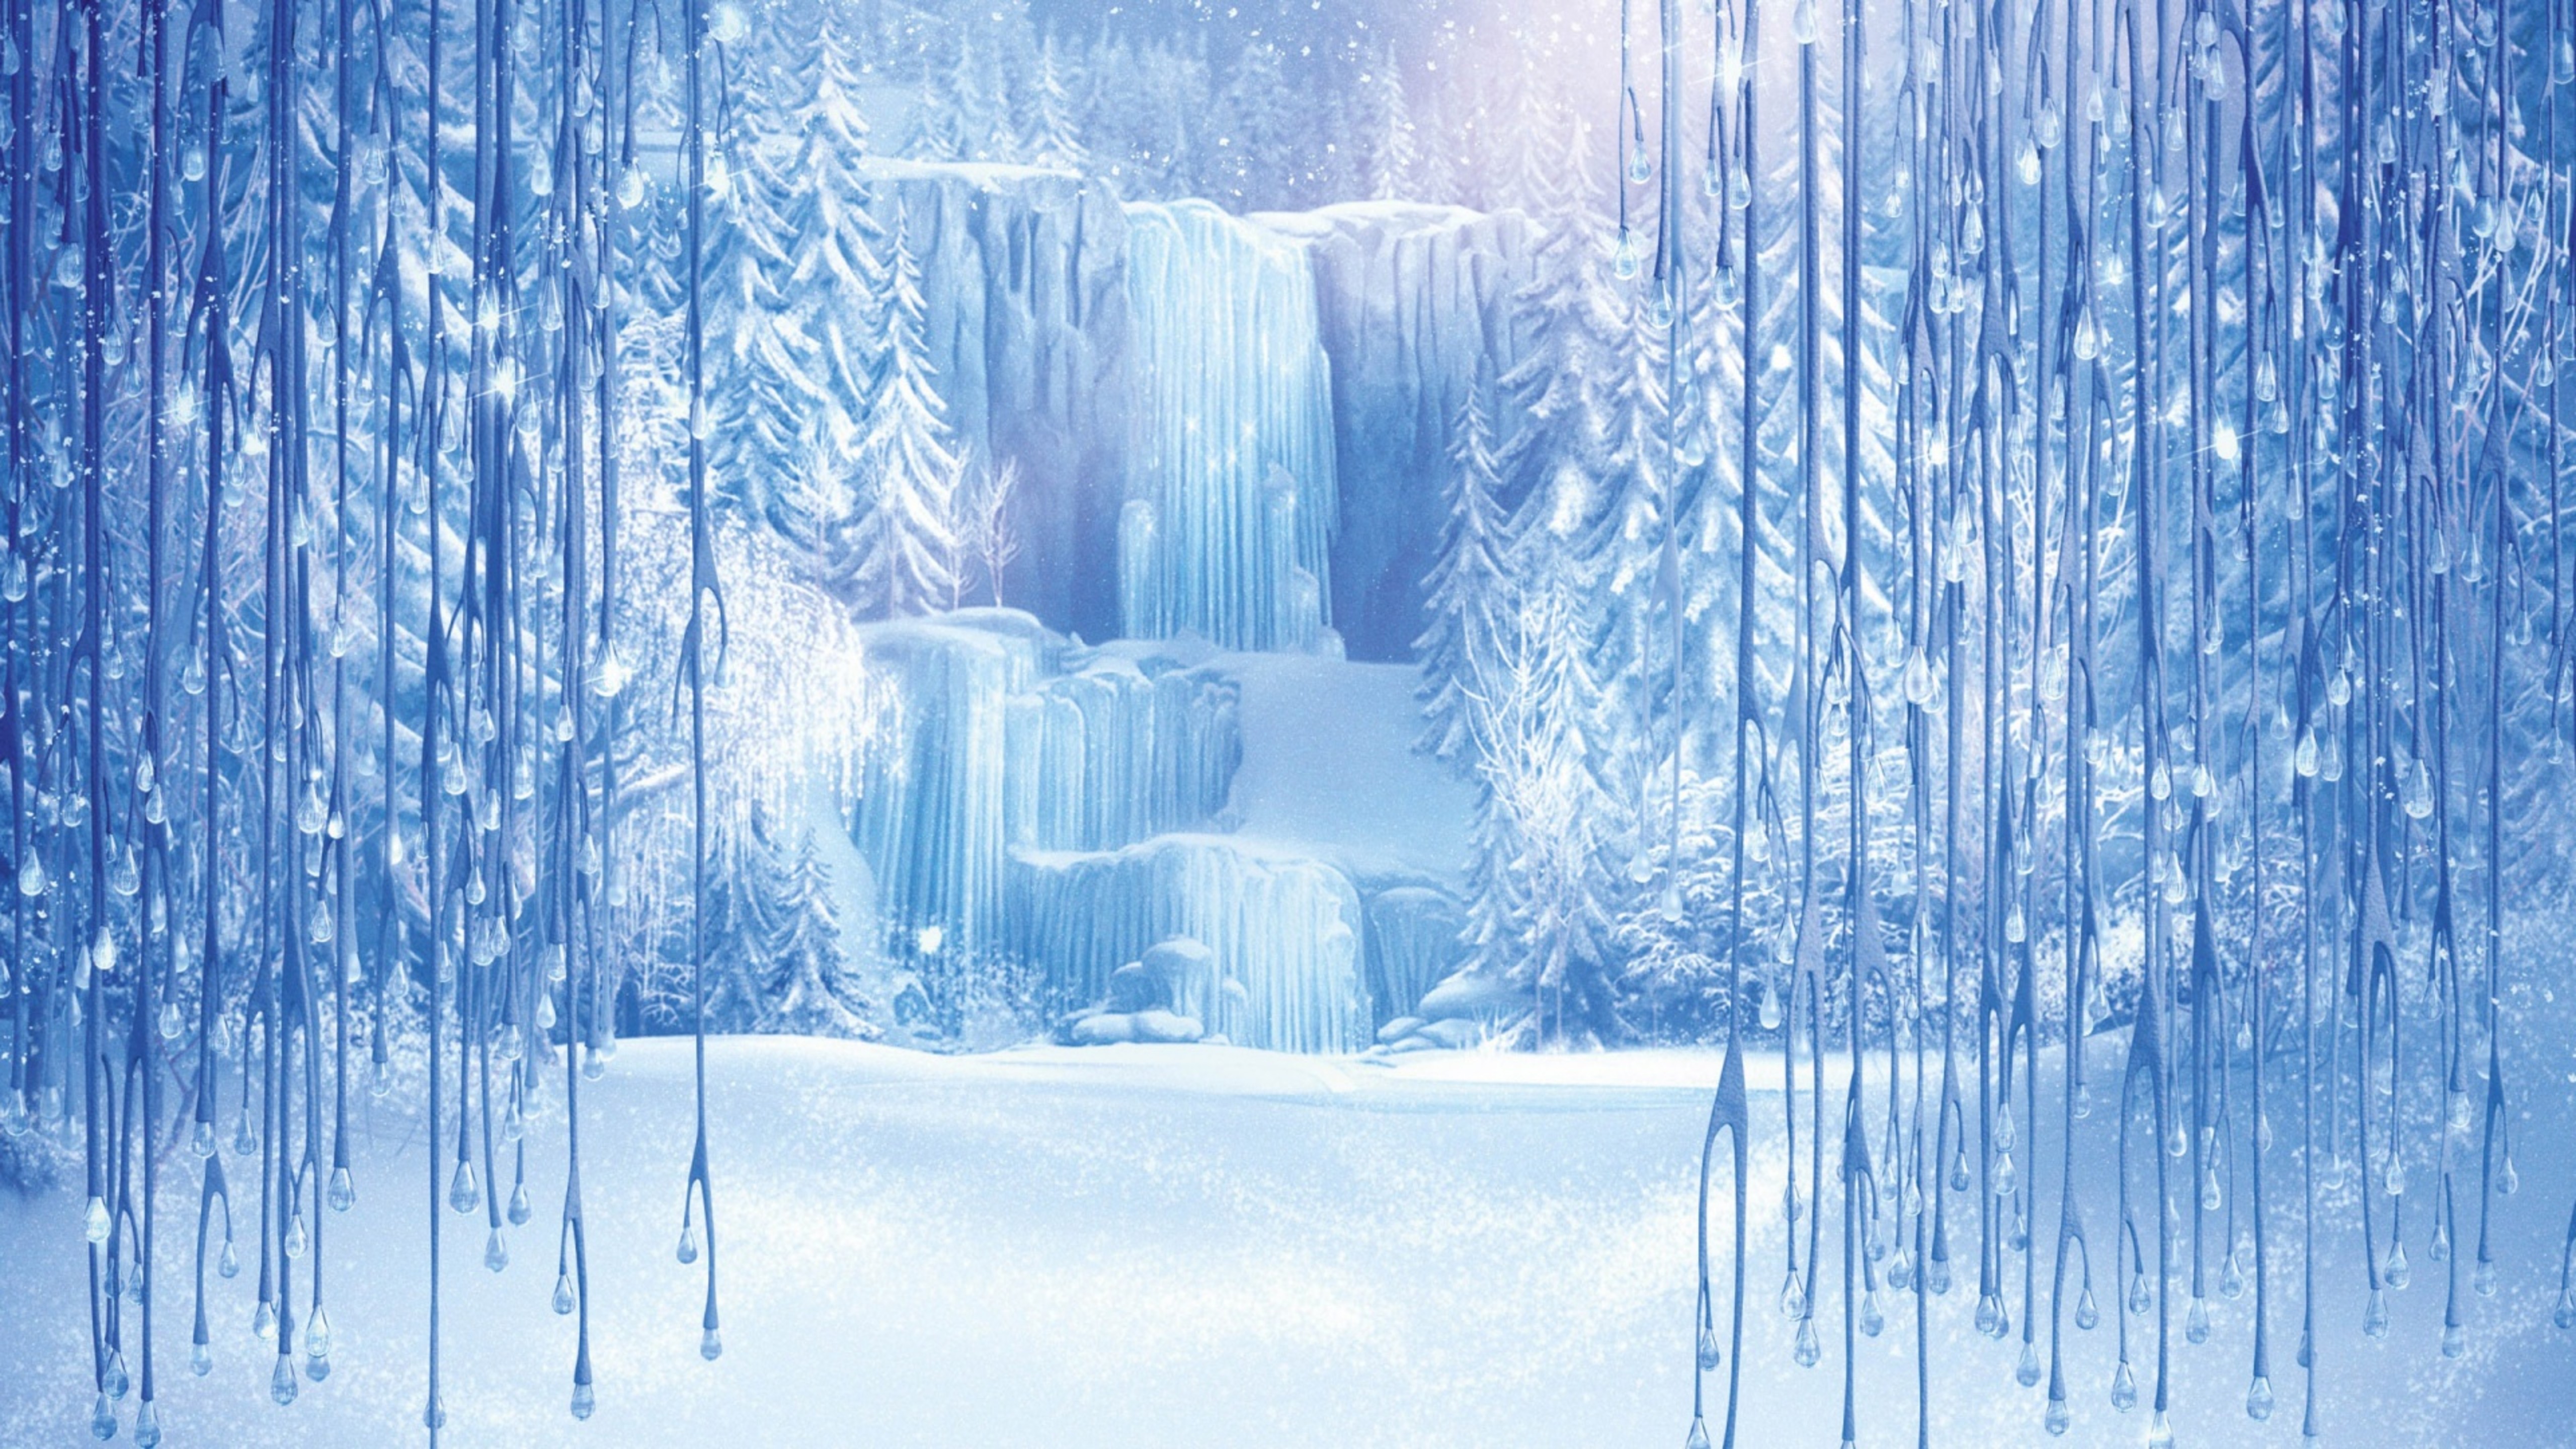 Frozen curtain - magic winter season Wallpaper Download 5120x2880